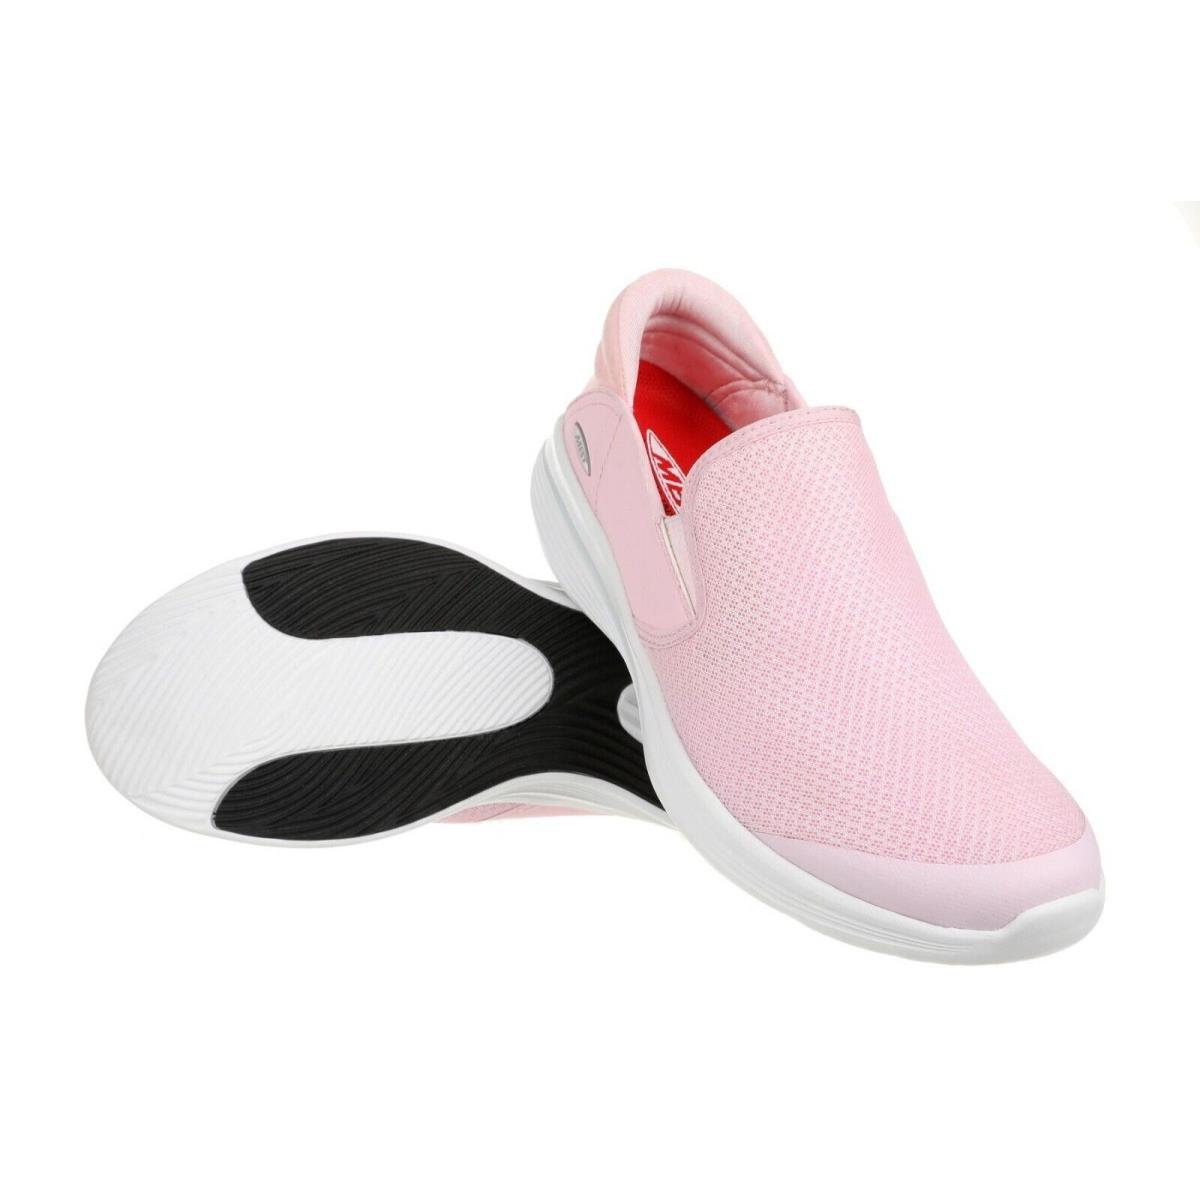 Mbt Modena Iii Slip On Women`s Walking Shoe Ultra-light Mesh Upper 11 Colors Cradle Pink